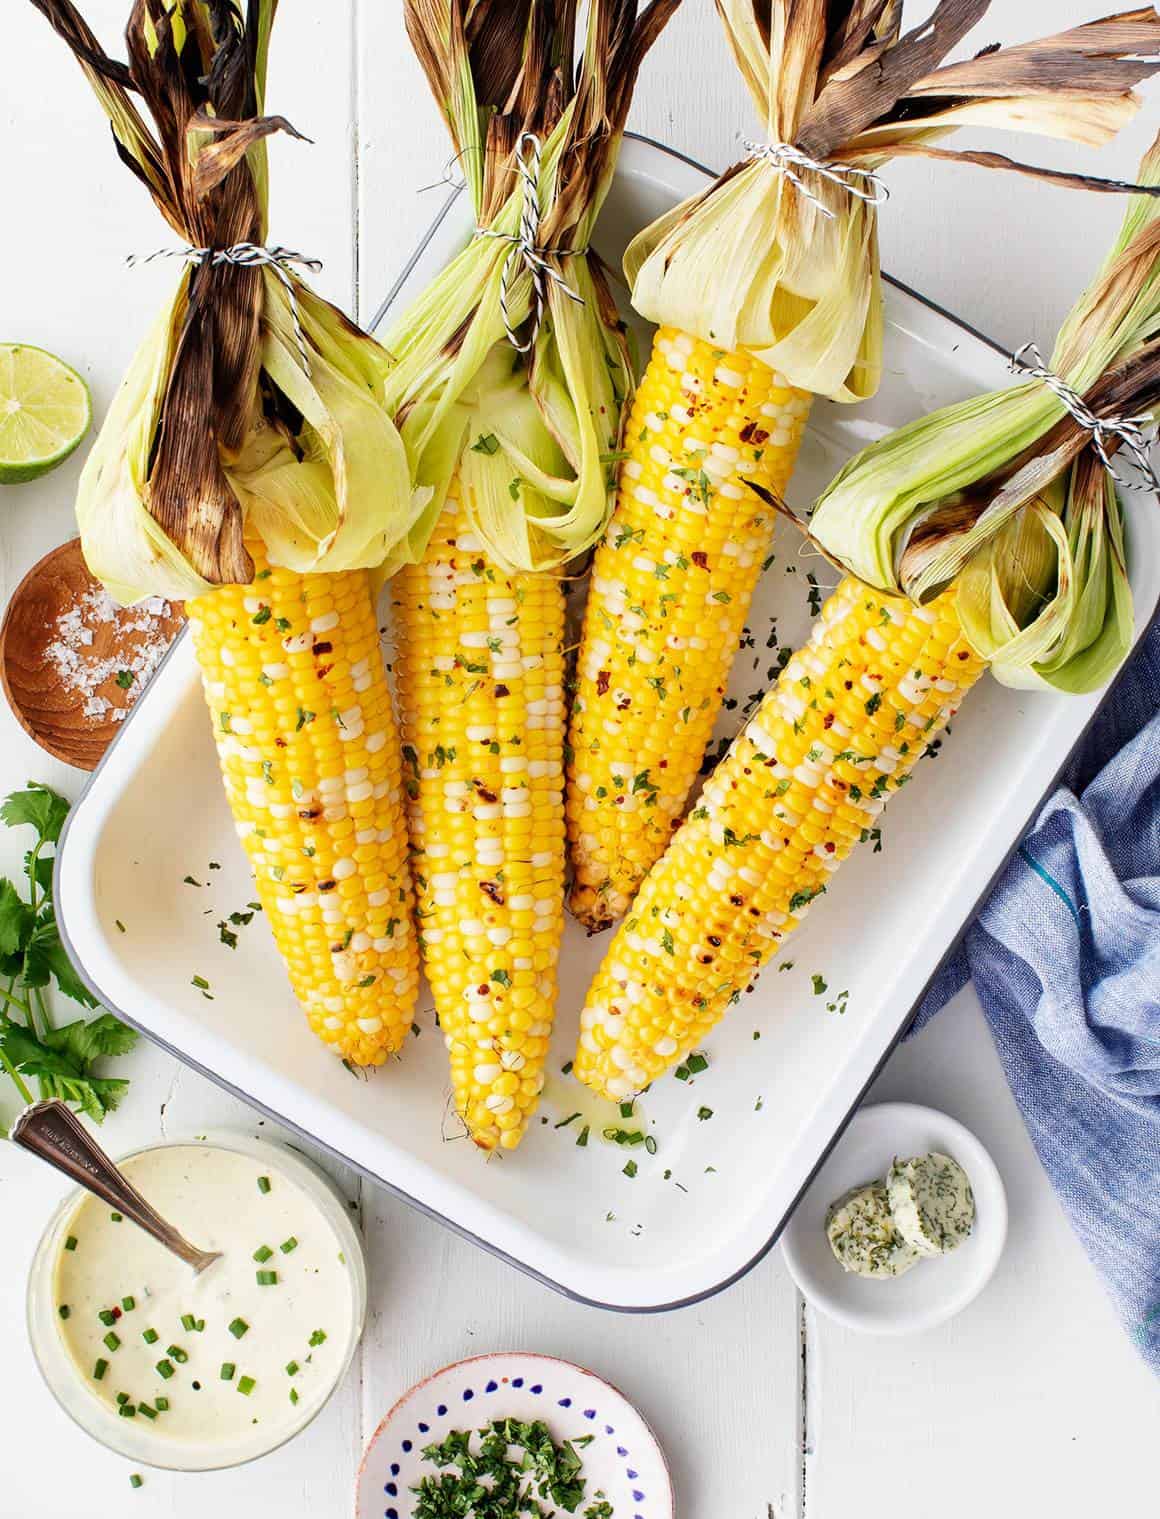 fresh corn recipes